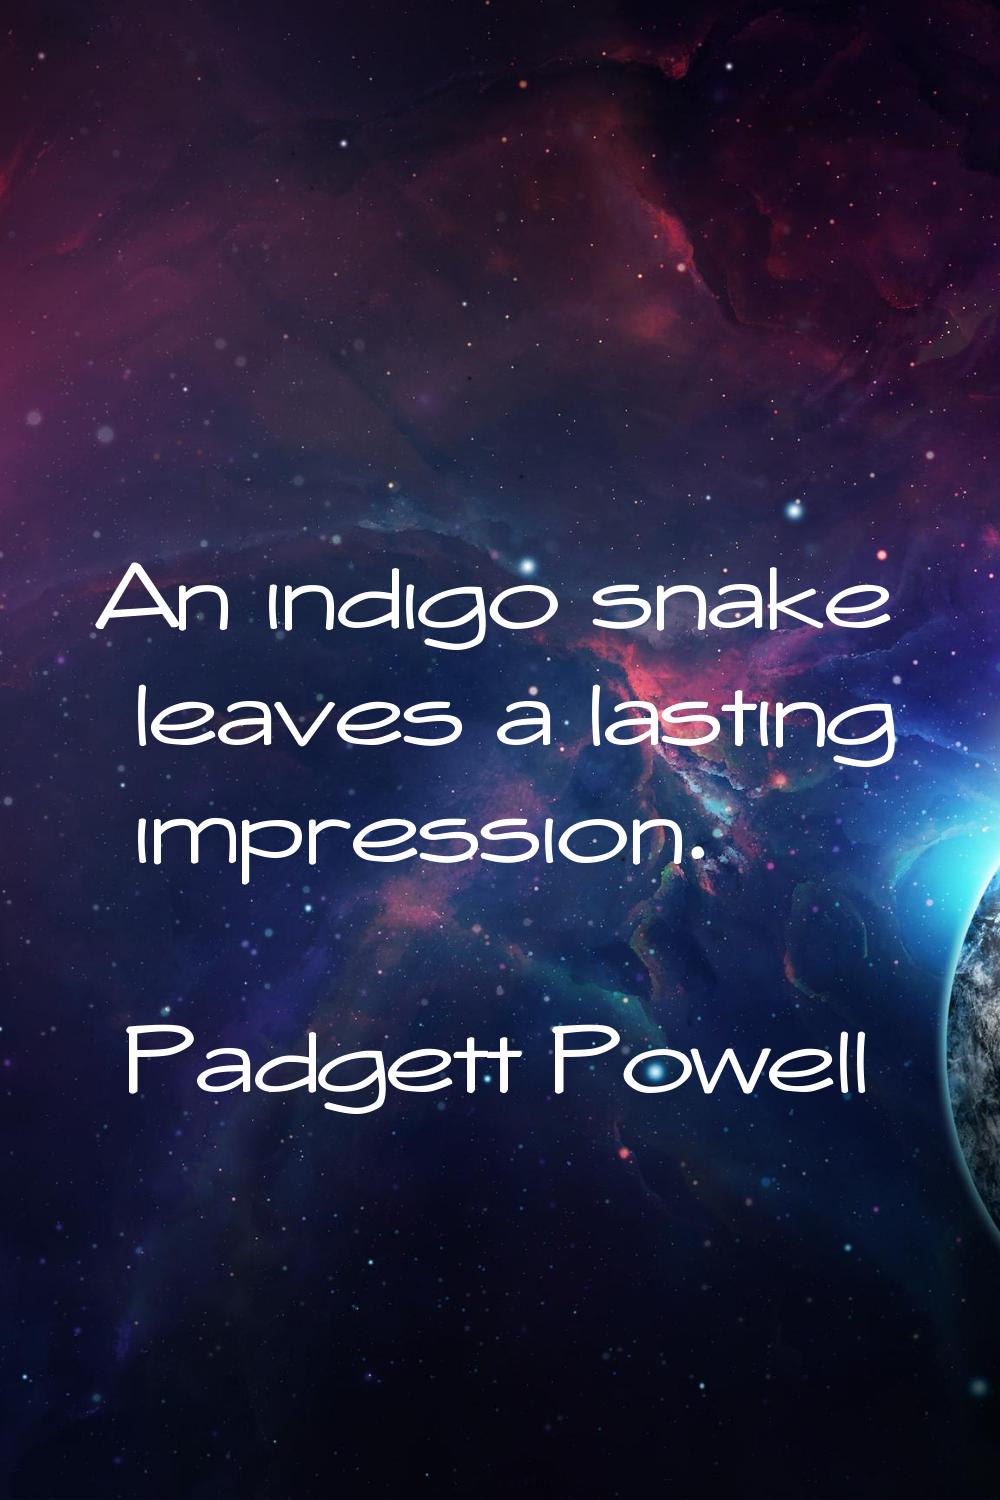 An indigo snake leaves a lasting impression.